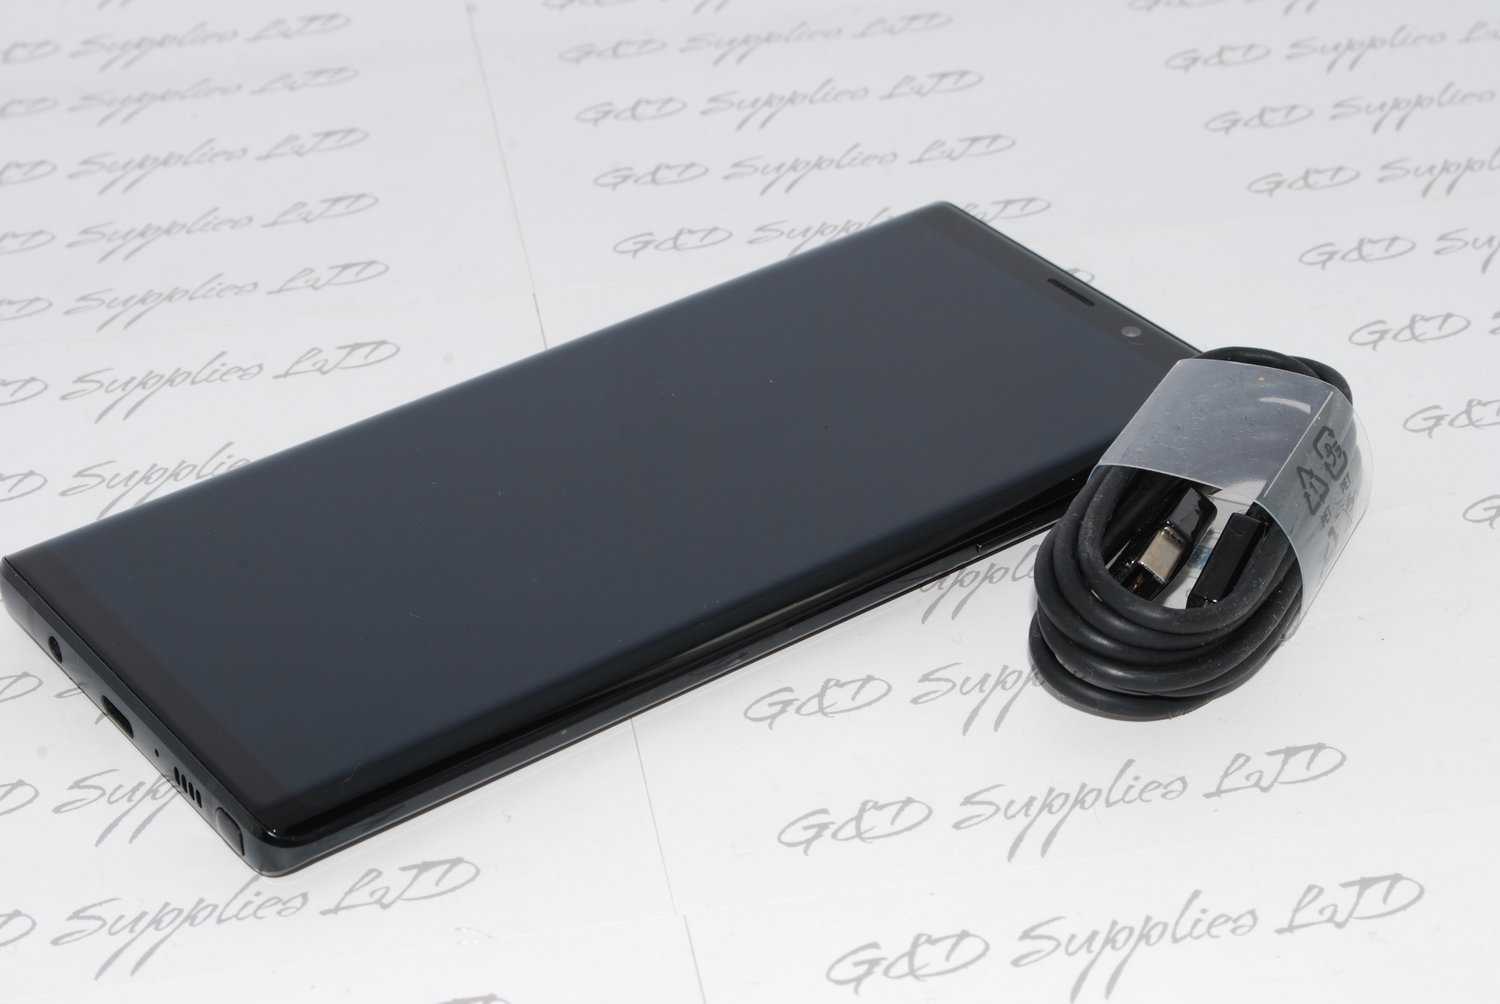 Samsung Galaxy Note 9 SM-N960 128GB Black UNLOCKED Single SIM UK Version NO BOX #